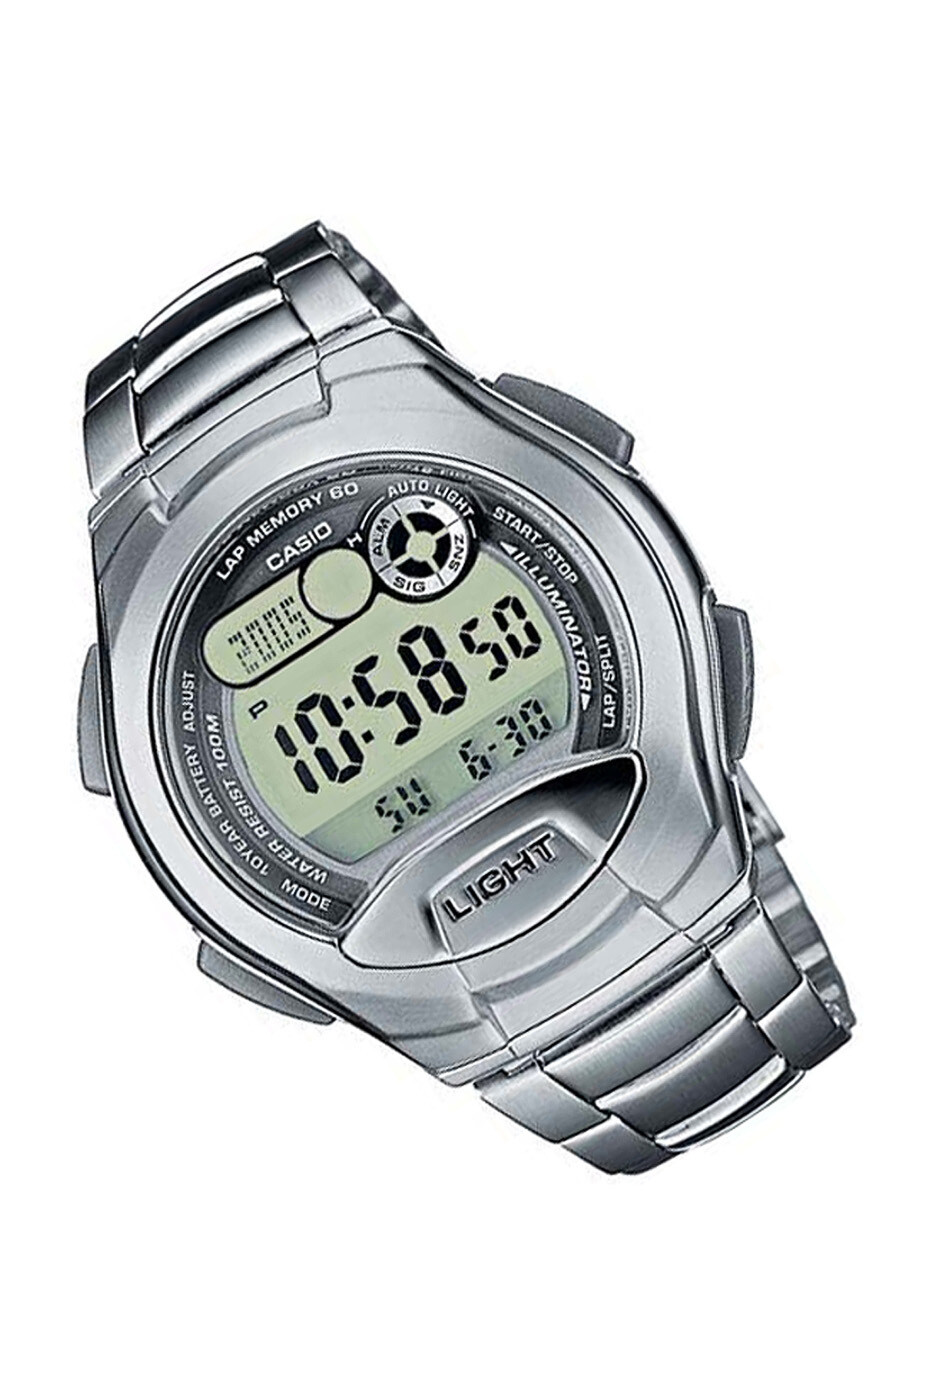 Reloj deportivo hombre Casio W-752D-1A Memoria de vueltas 60 Luz Led Contador de pasos 5 alarmas diarias correa acero